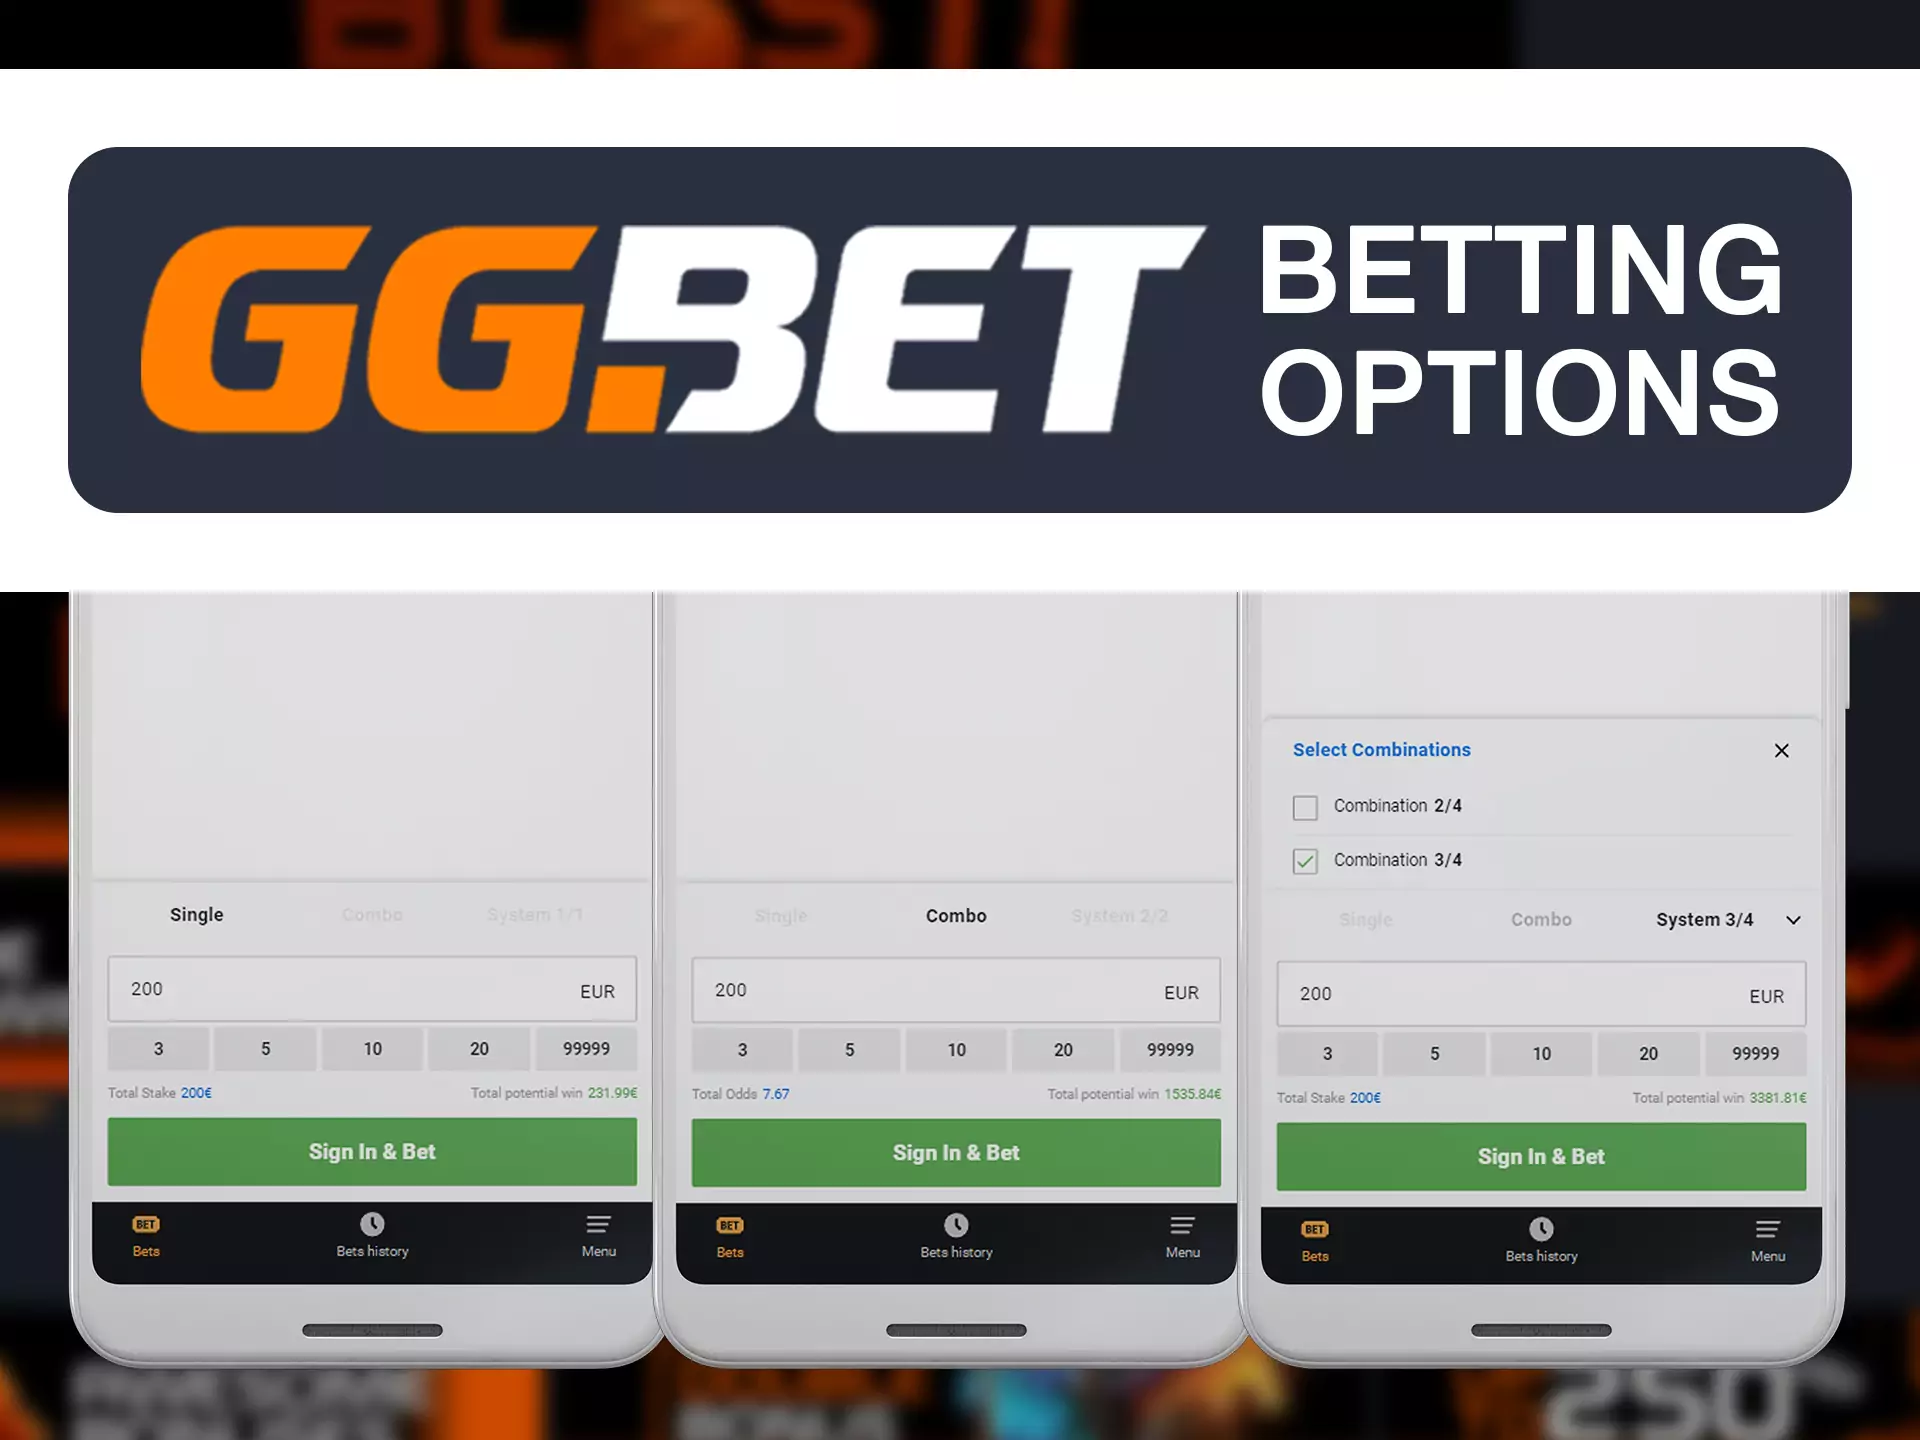 Unlock new betting options with GGBet app.